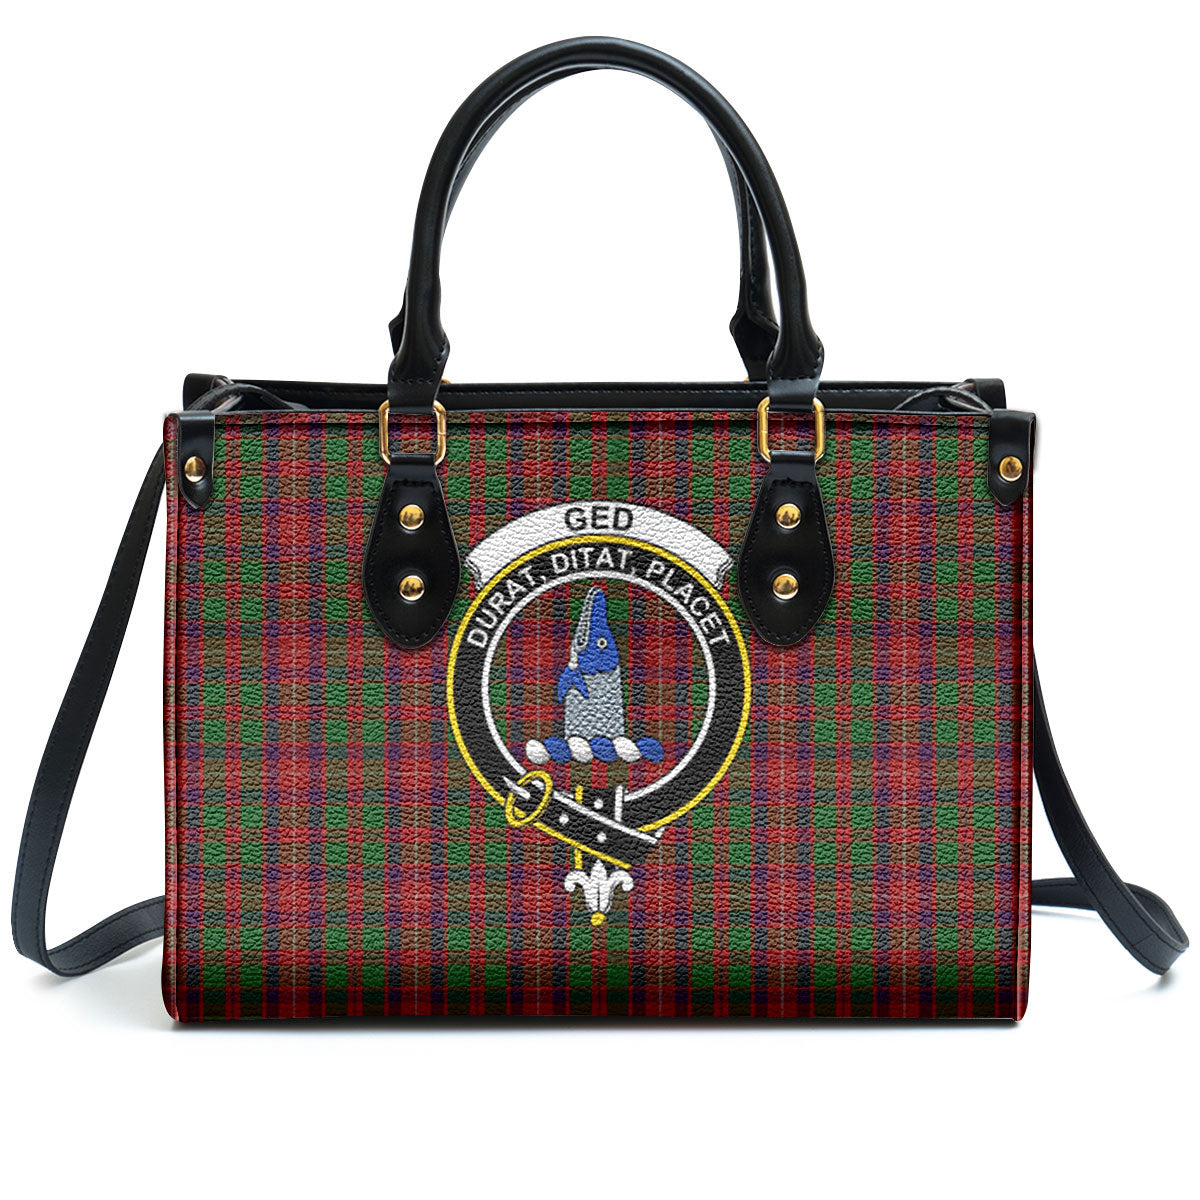 Ged Tartan Crest Leather Handbag